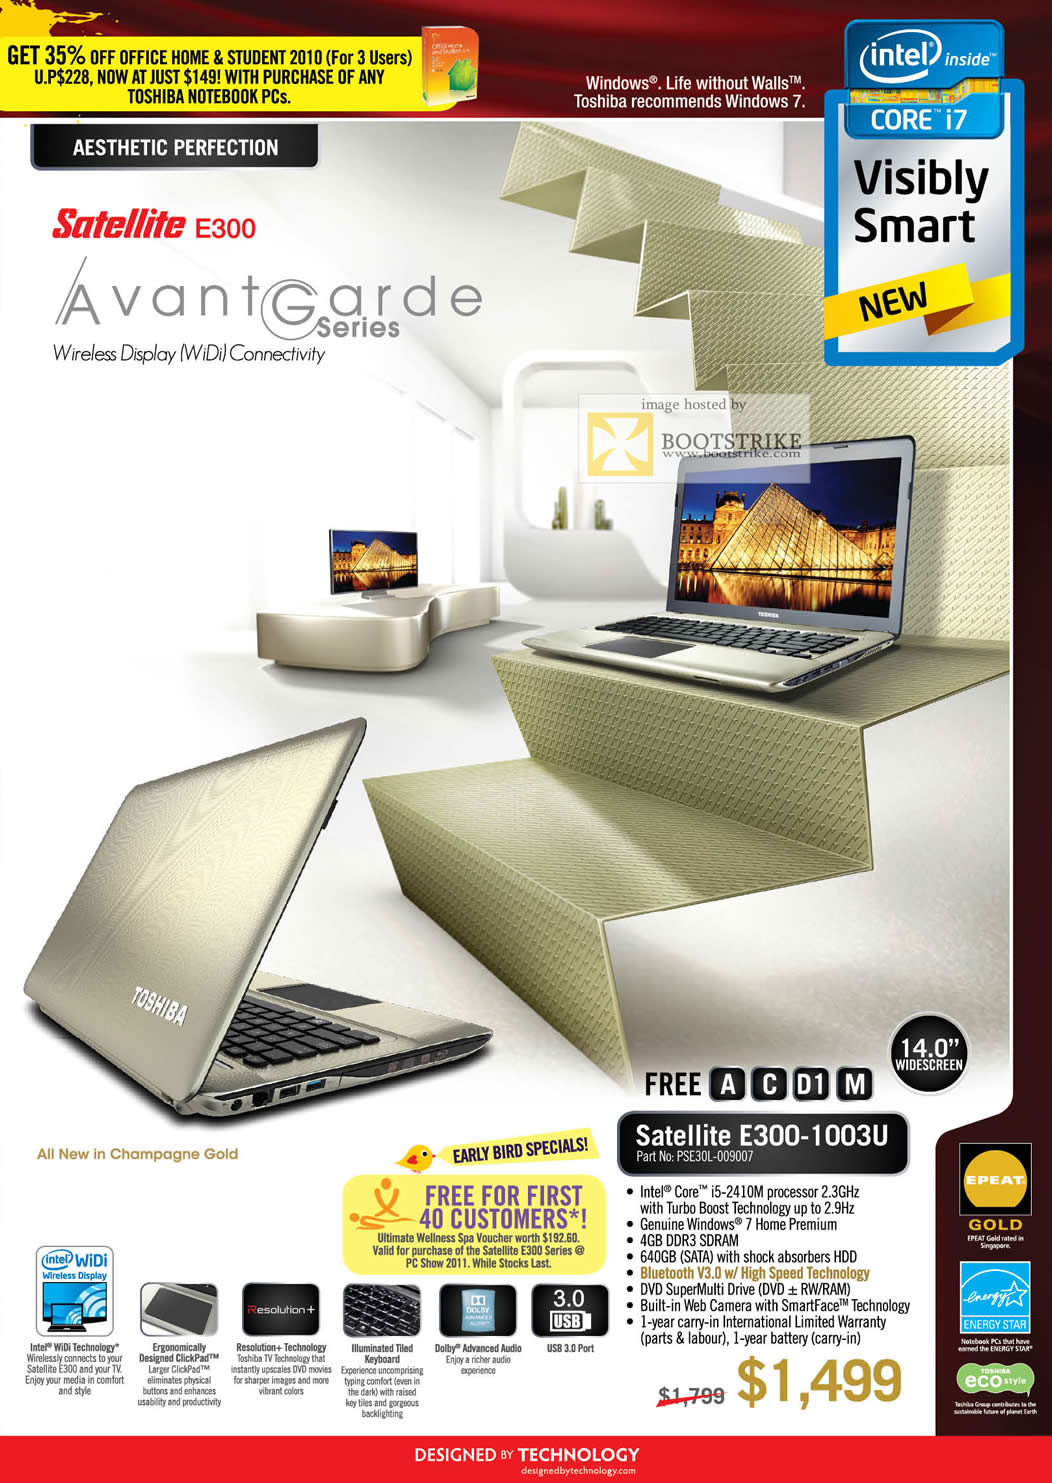 PC Show 2011 price list image brochure of Toshiba Notebooks Satellite E300 Avant Garde Series Wireless Display WiDi E300-1003U